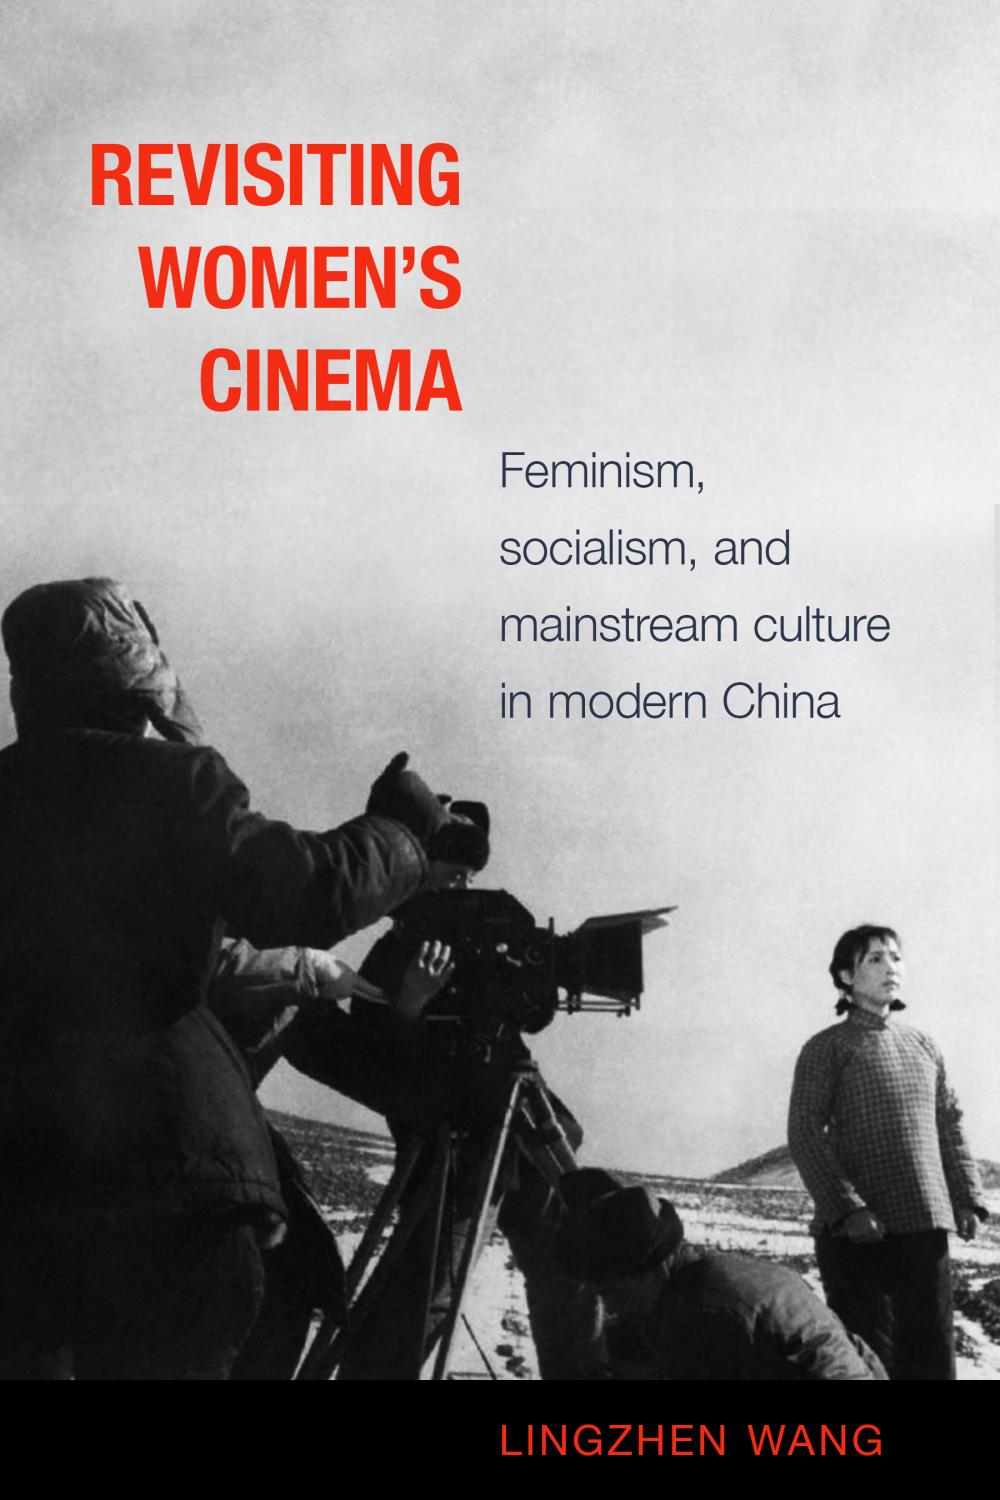 Revisiting women's cinema